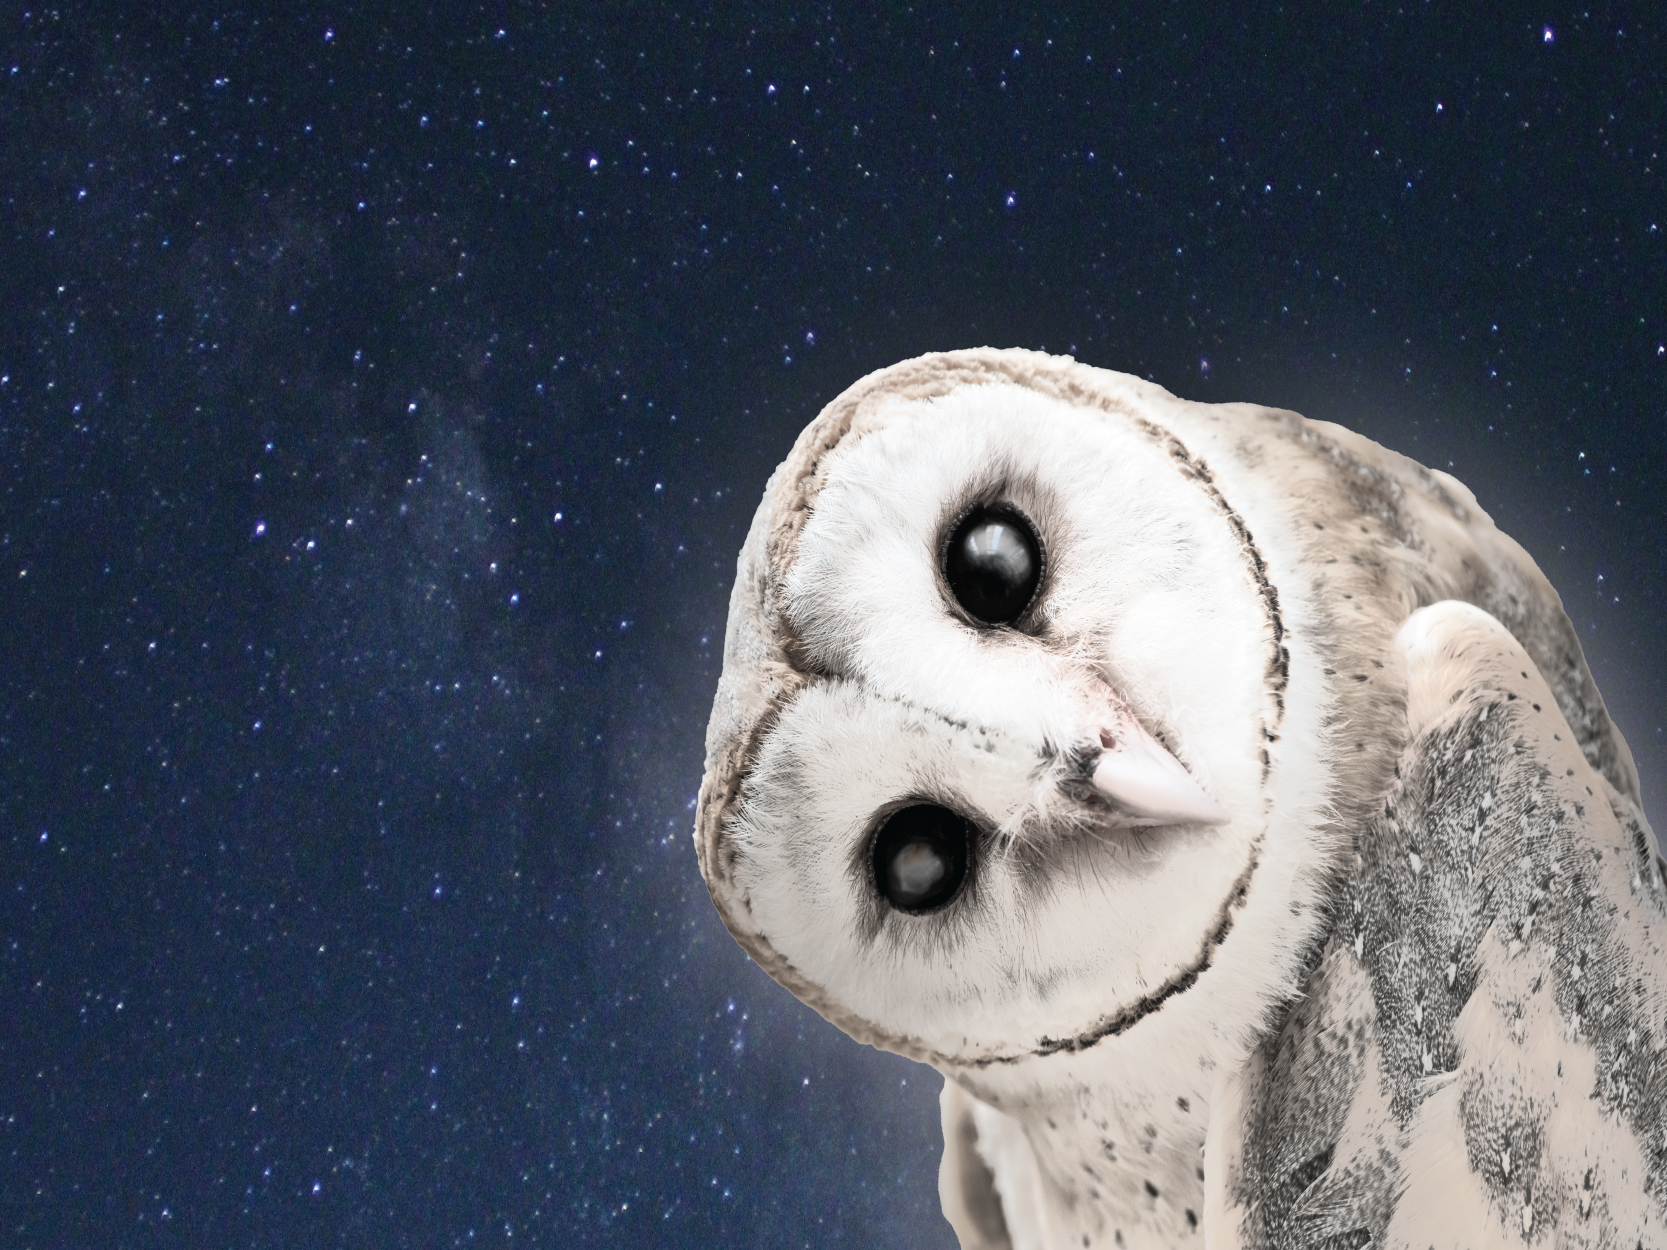 Hoo wants to be owl friendly